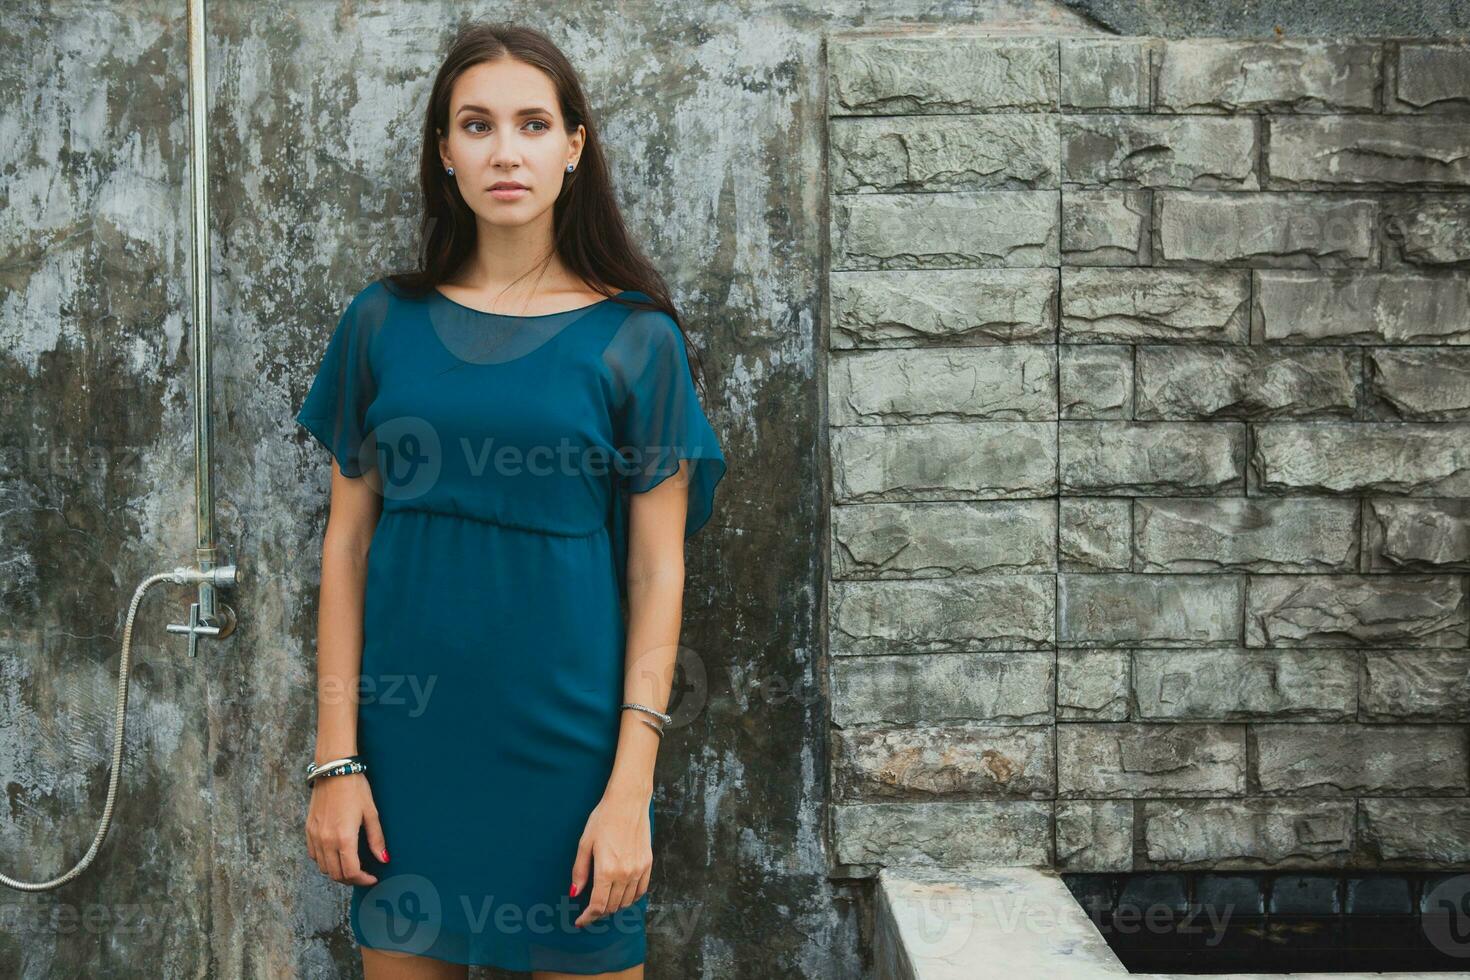 giovane elegante bellissimo donna nel blu vestire, estate moda tendenza foto